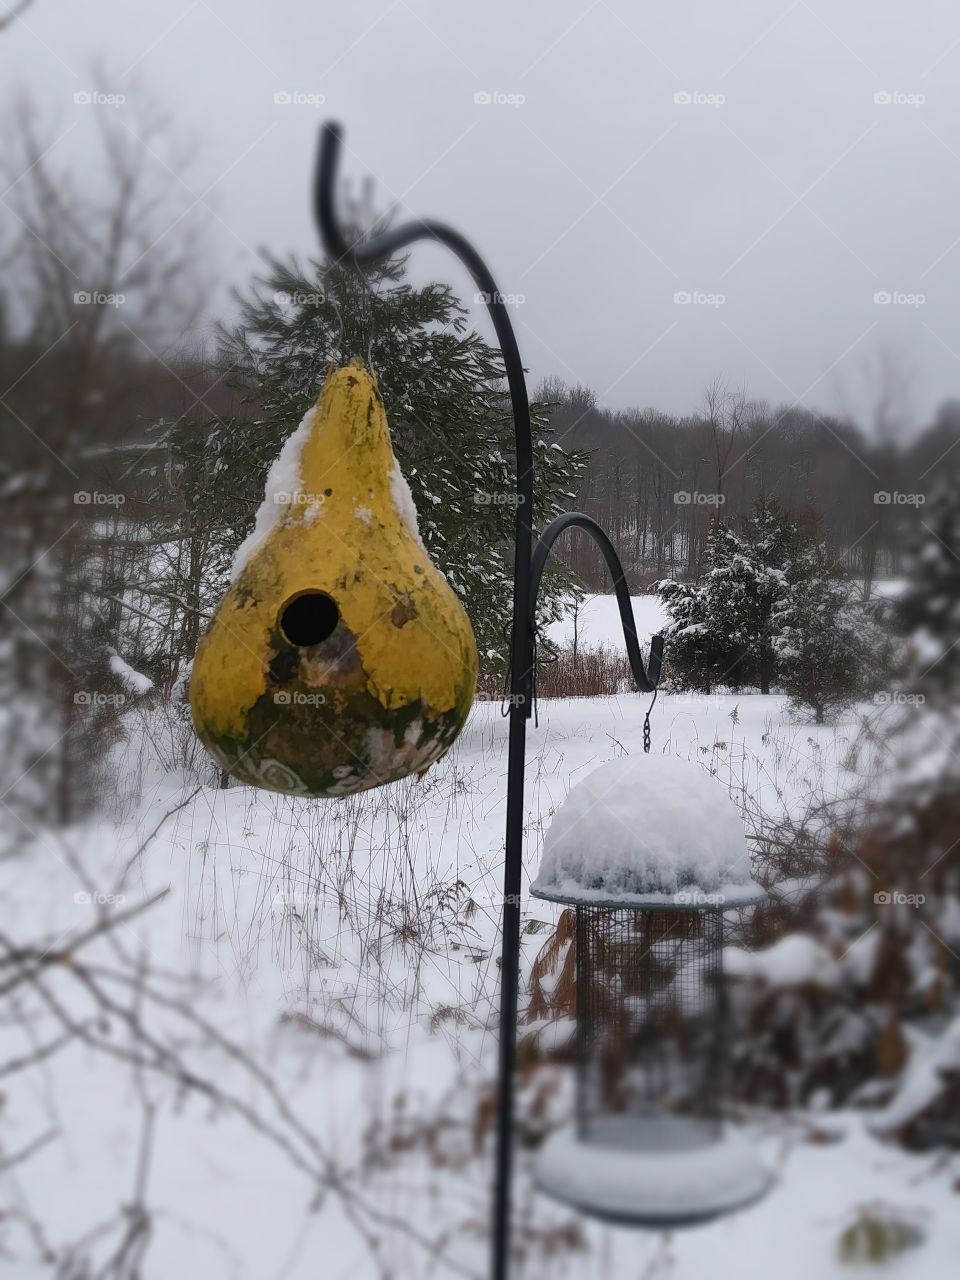 snow on bird feeder in winter.